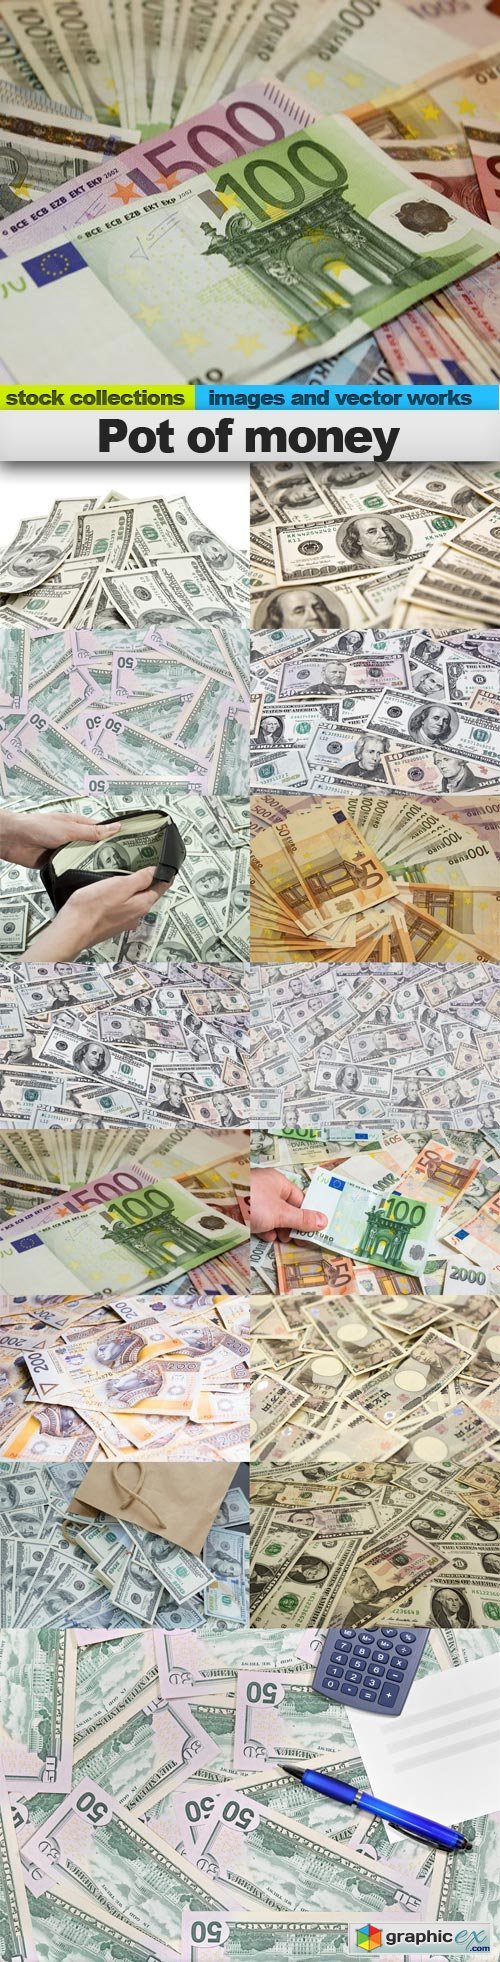 Pot of money, 15 x UHQ JPEG